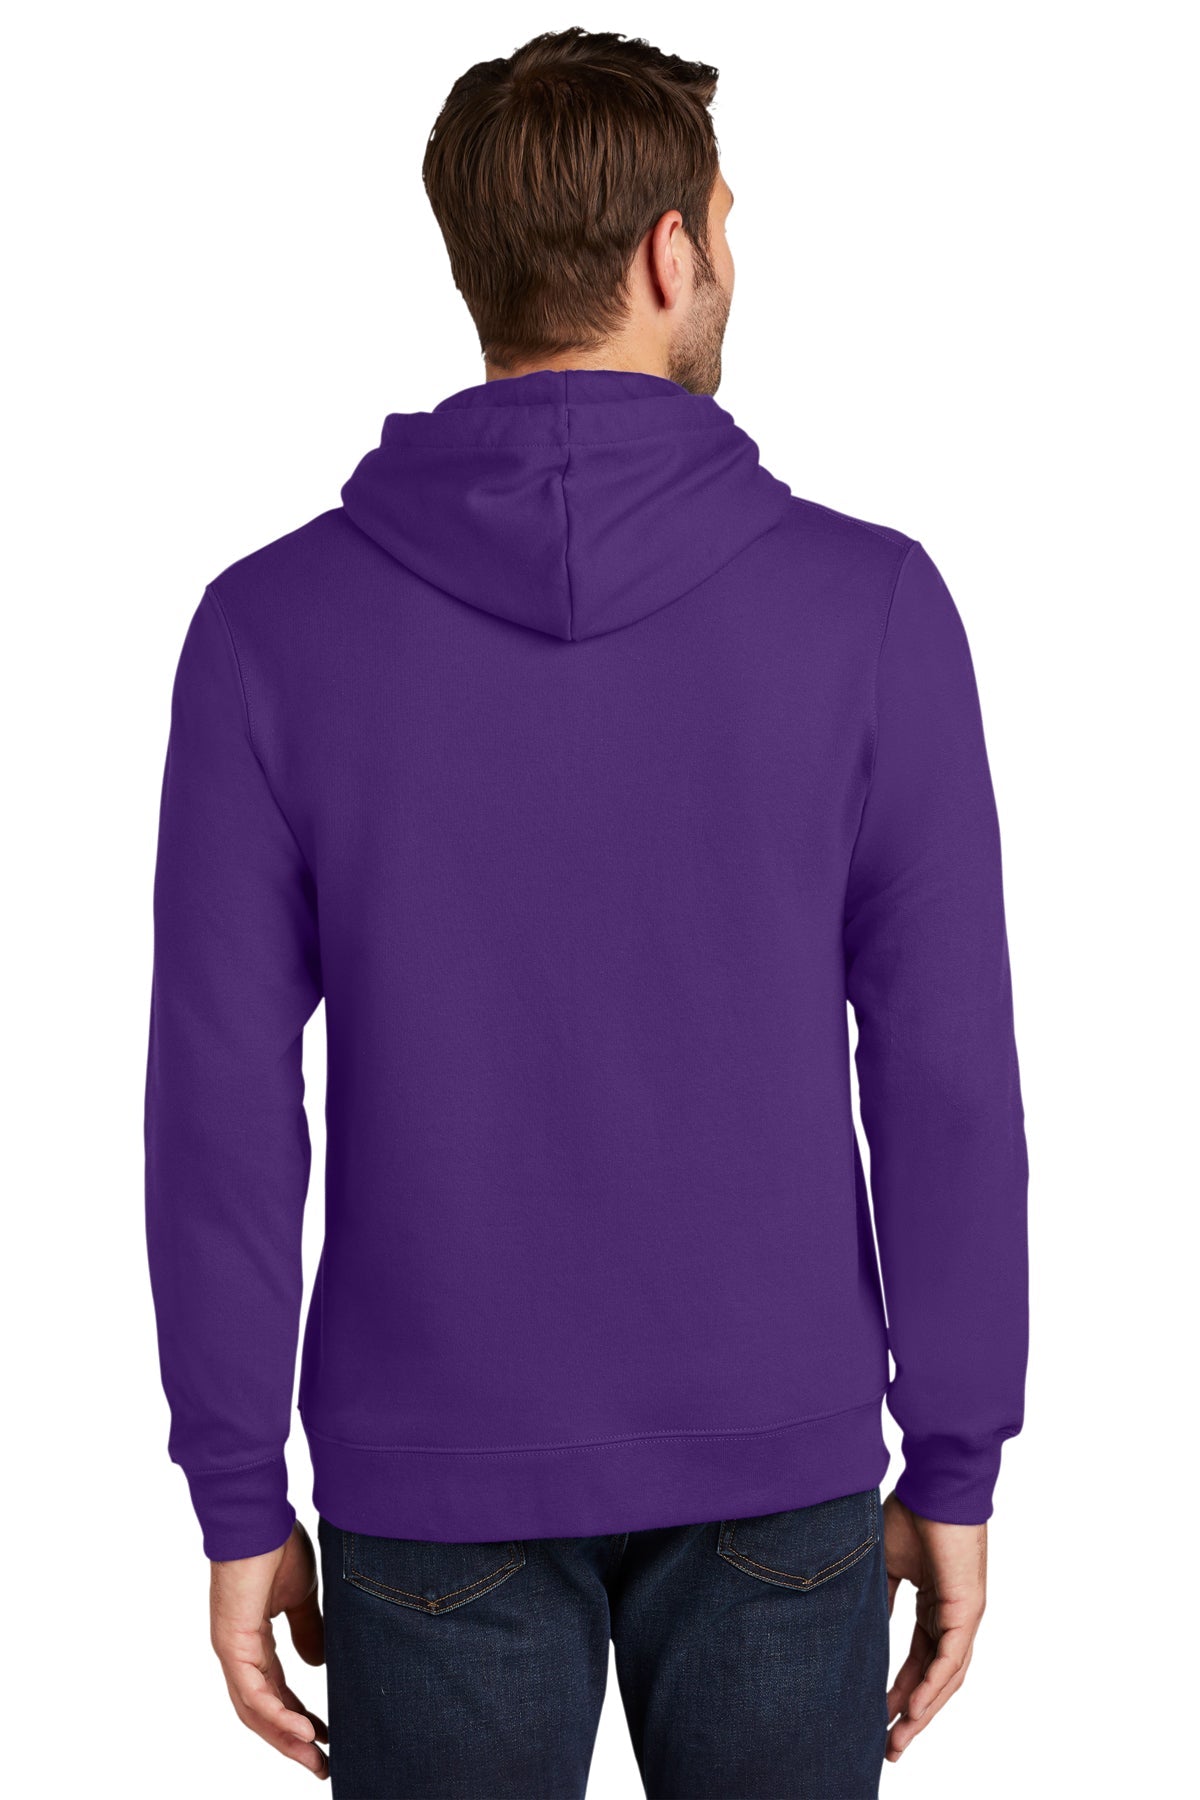 port & company_pc850h _team purple_company_logo_sweatshirts